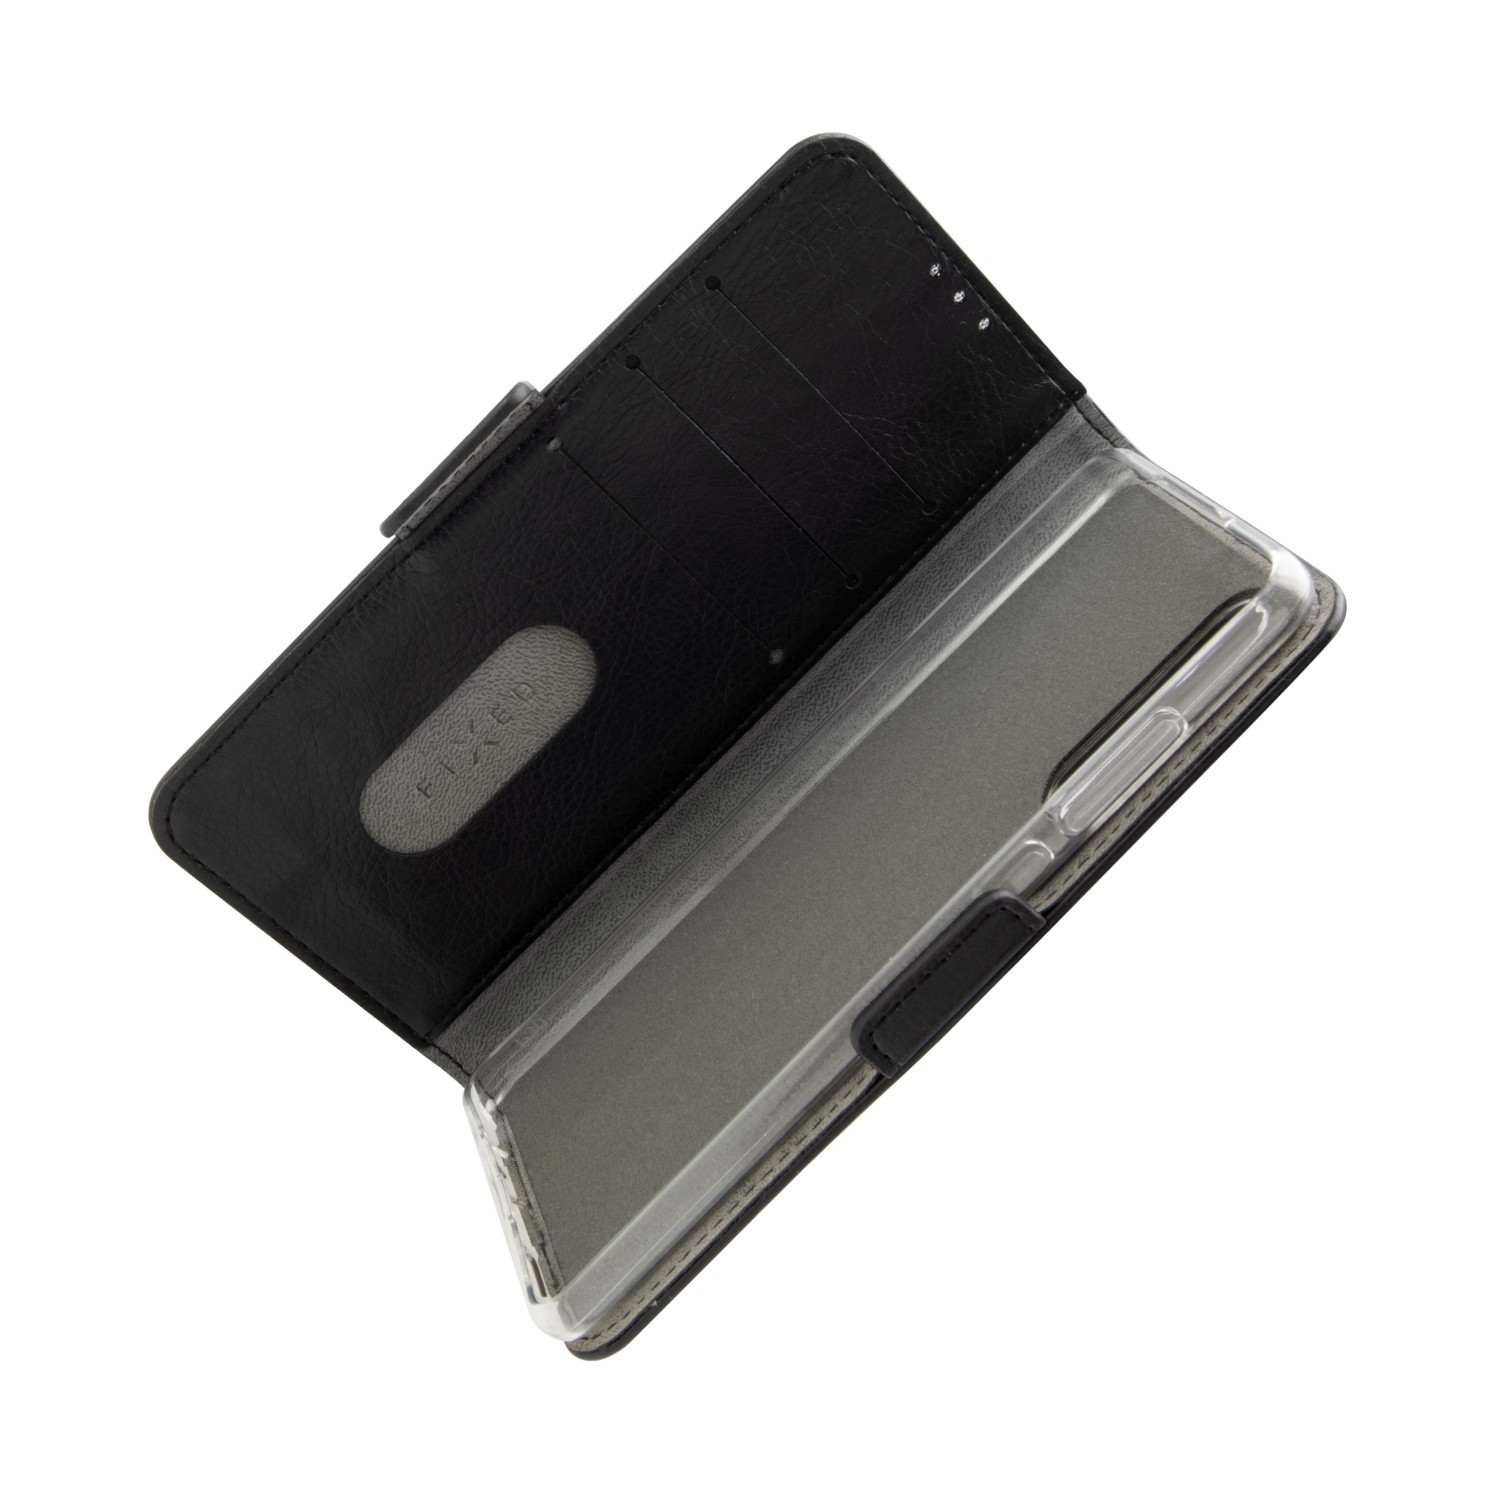 Flipové pouzdro FIXED Opus pro Samsung Galaxy S21 FE, černá